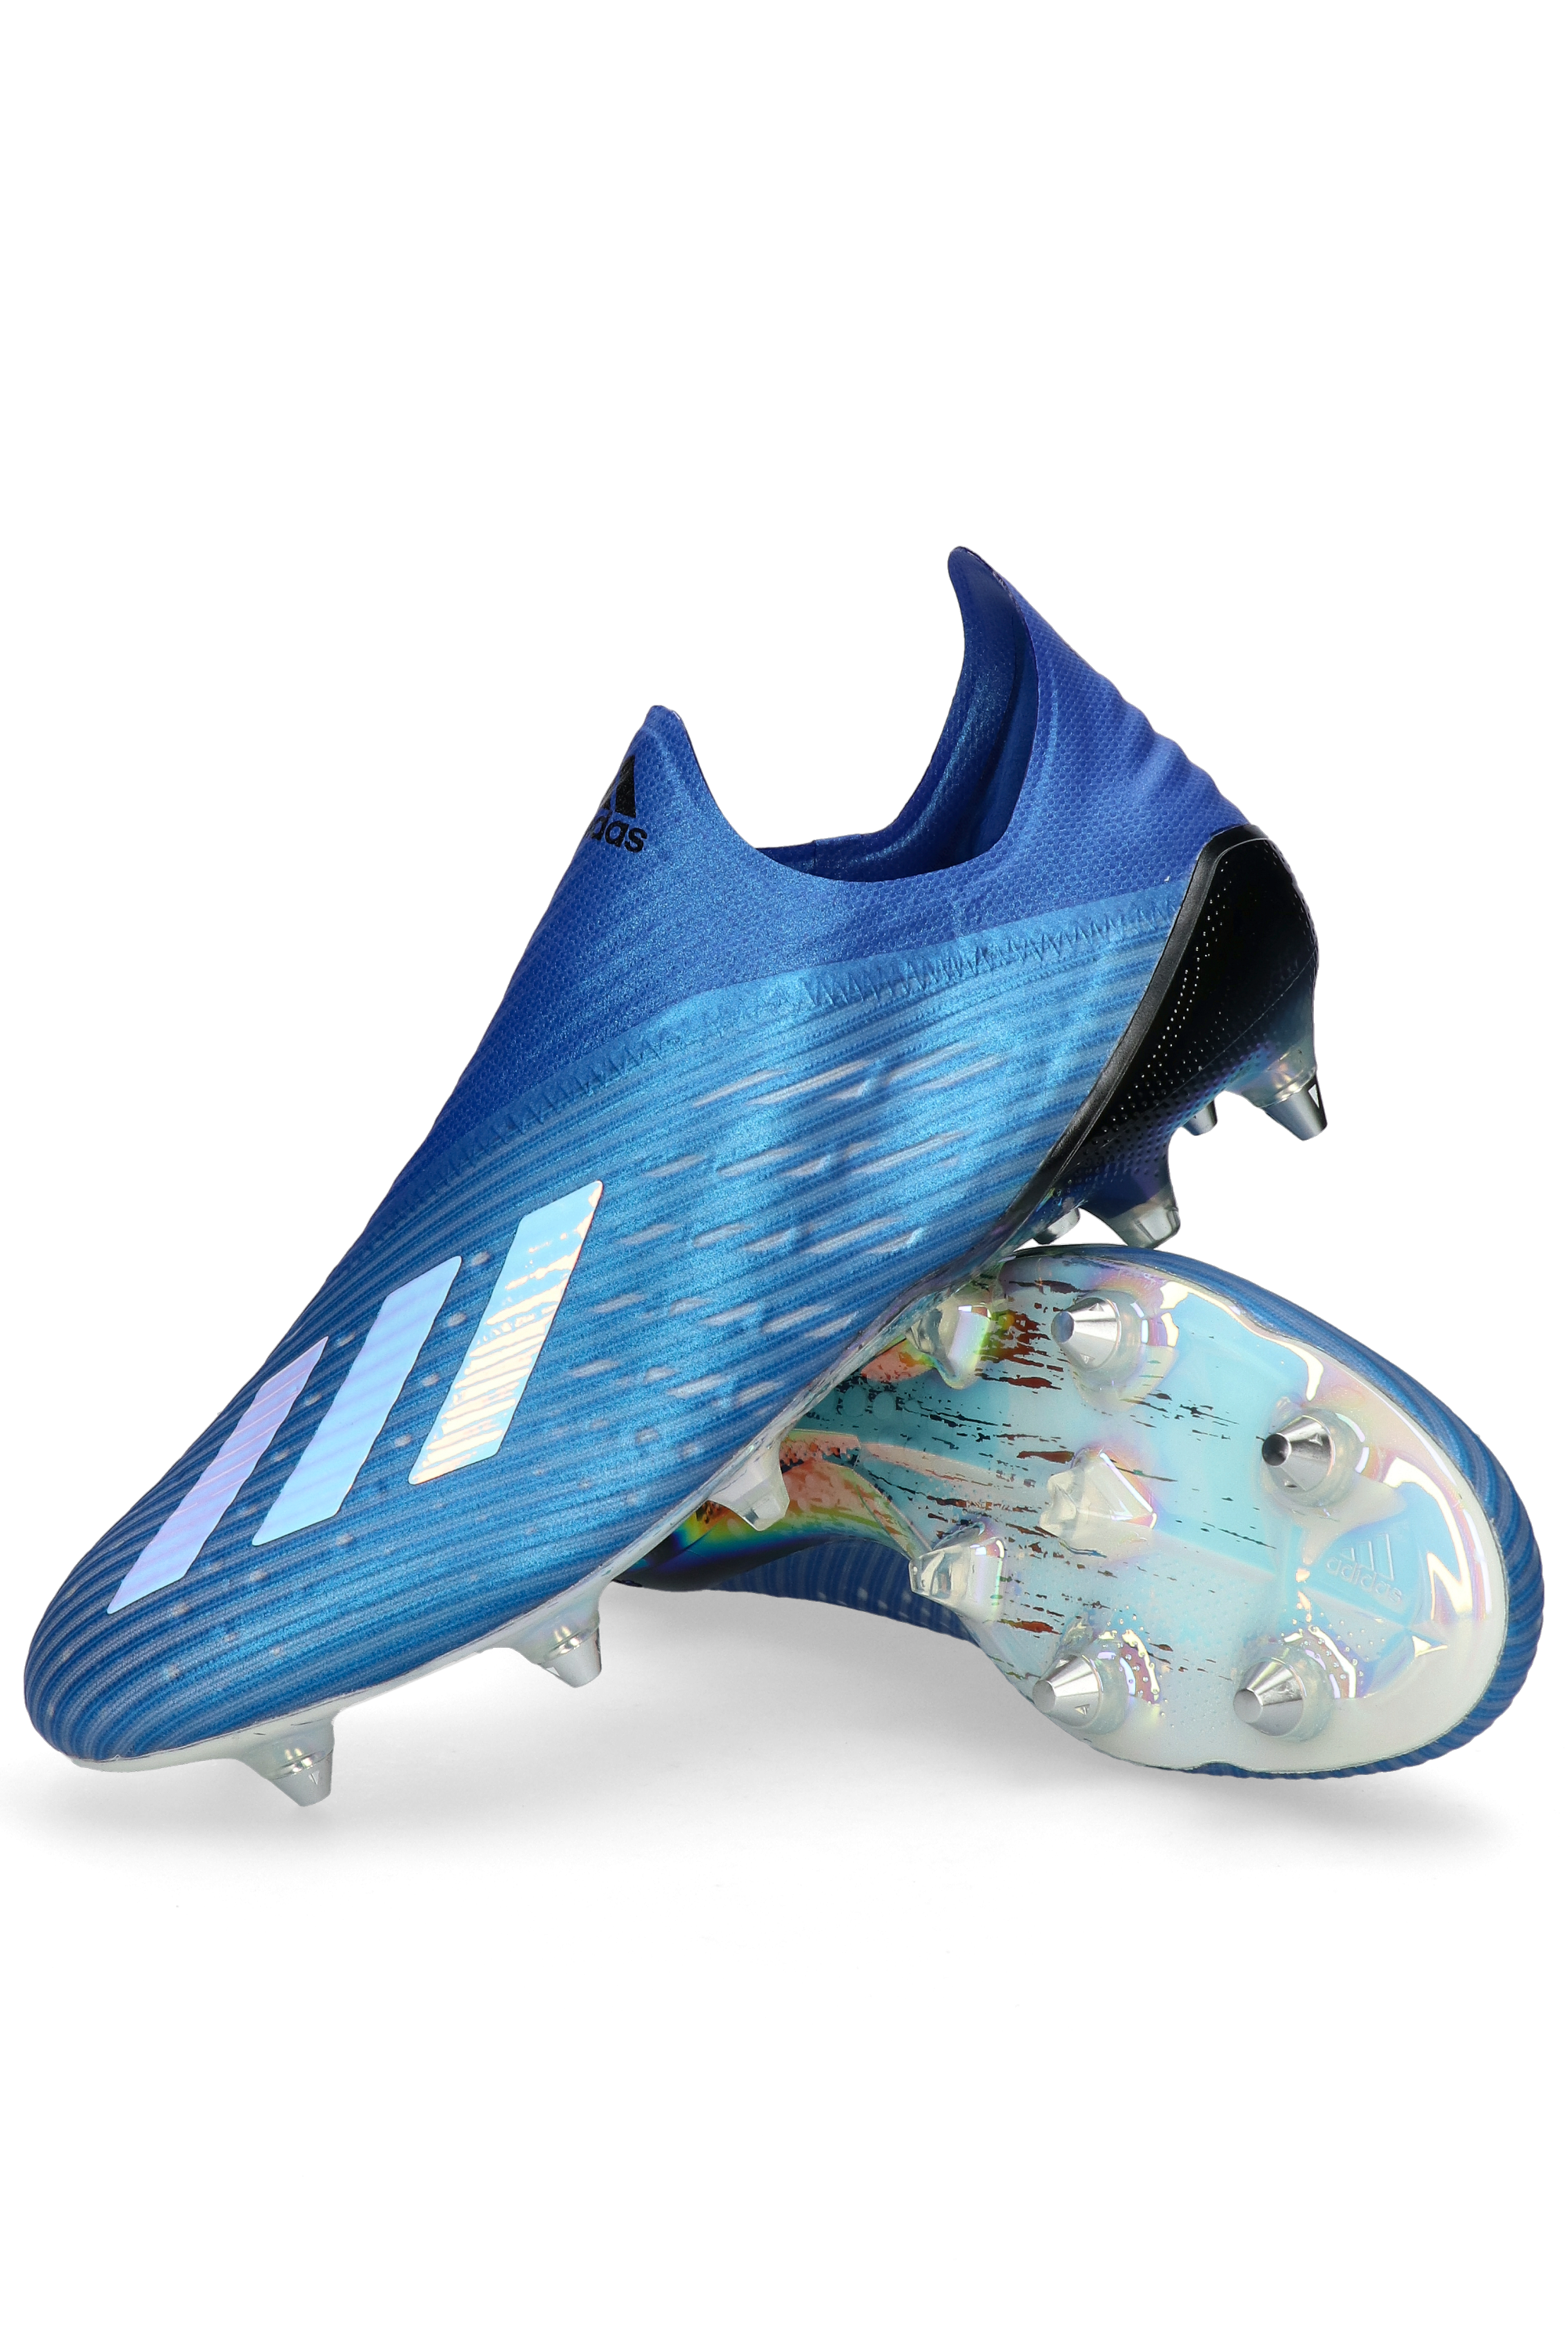 adidas X 19+ SG Soft Ground Boots | R-GOL.com - Football boots \u0026 equipment